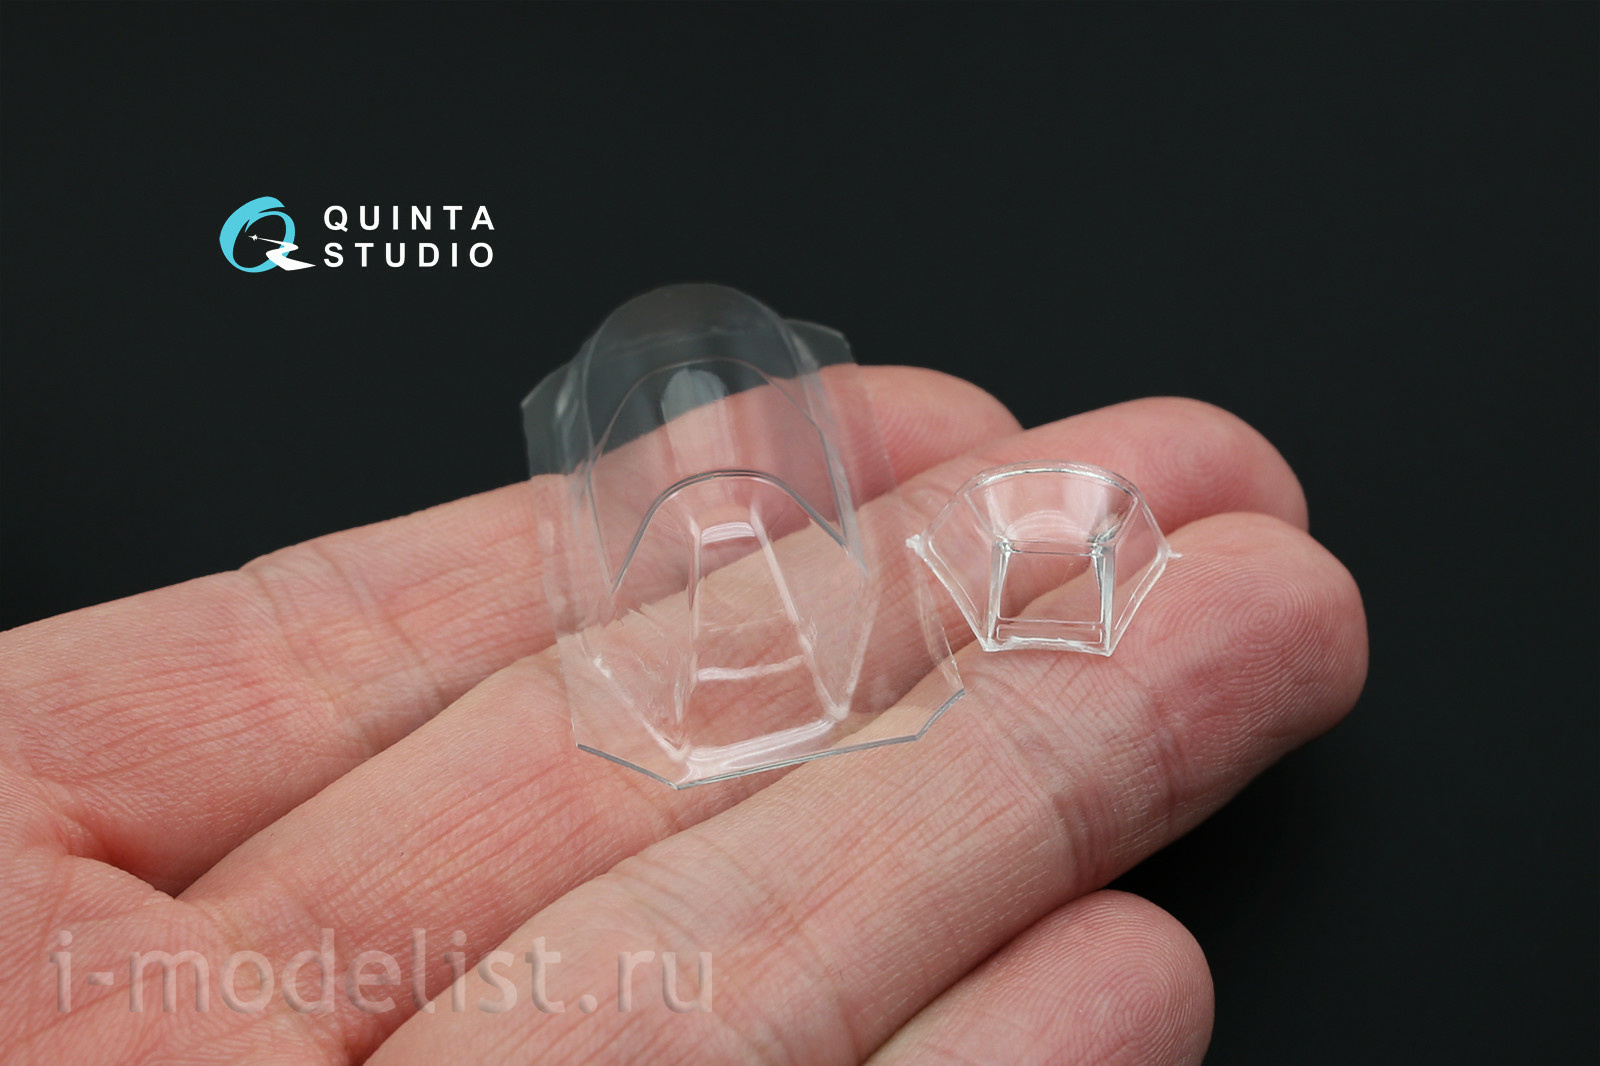 QC48020 Quinta Studio 1/48 set of glazing correction Yak-1B (for models Accurate miniatures, Zvezda, Eduard), 1 PC